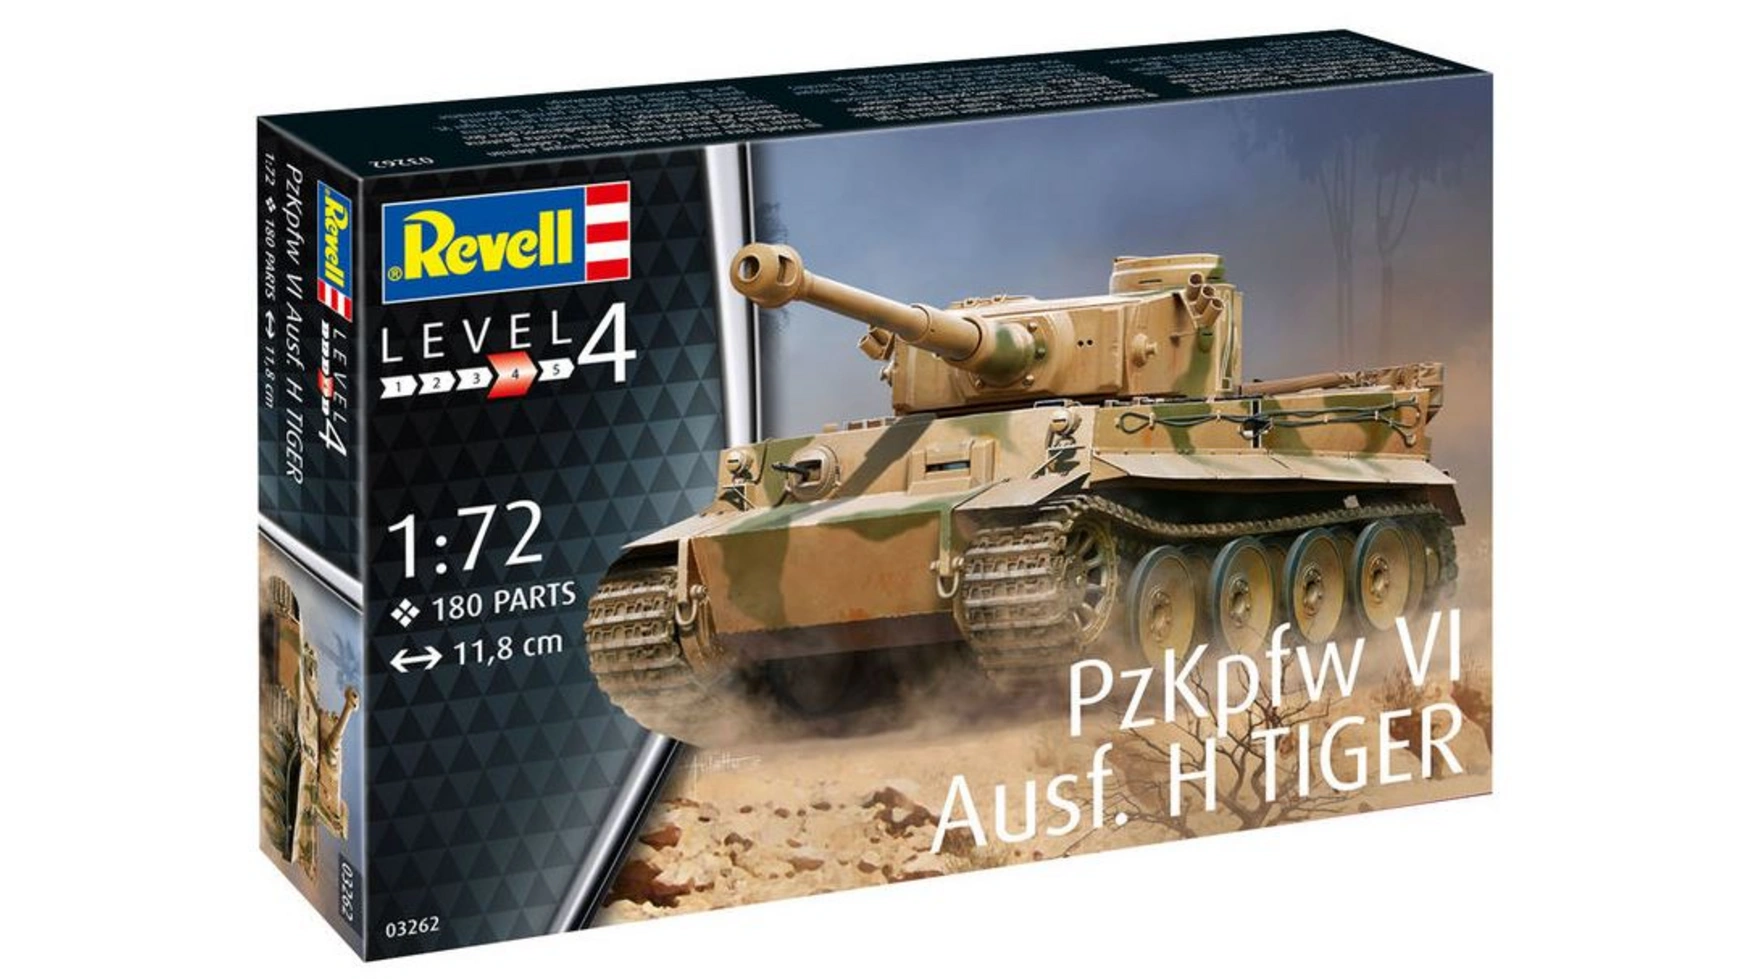 Revell PzKpfw VI AusfH TIGER